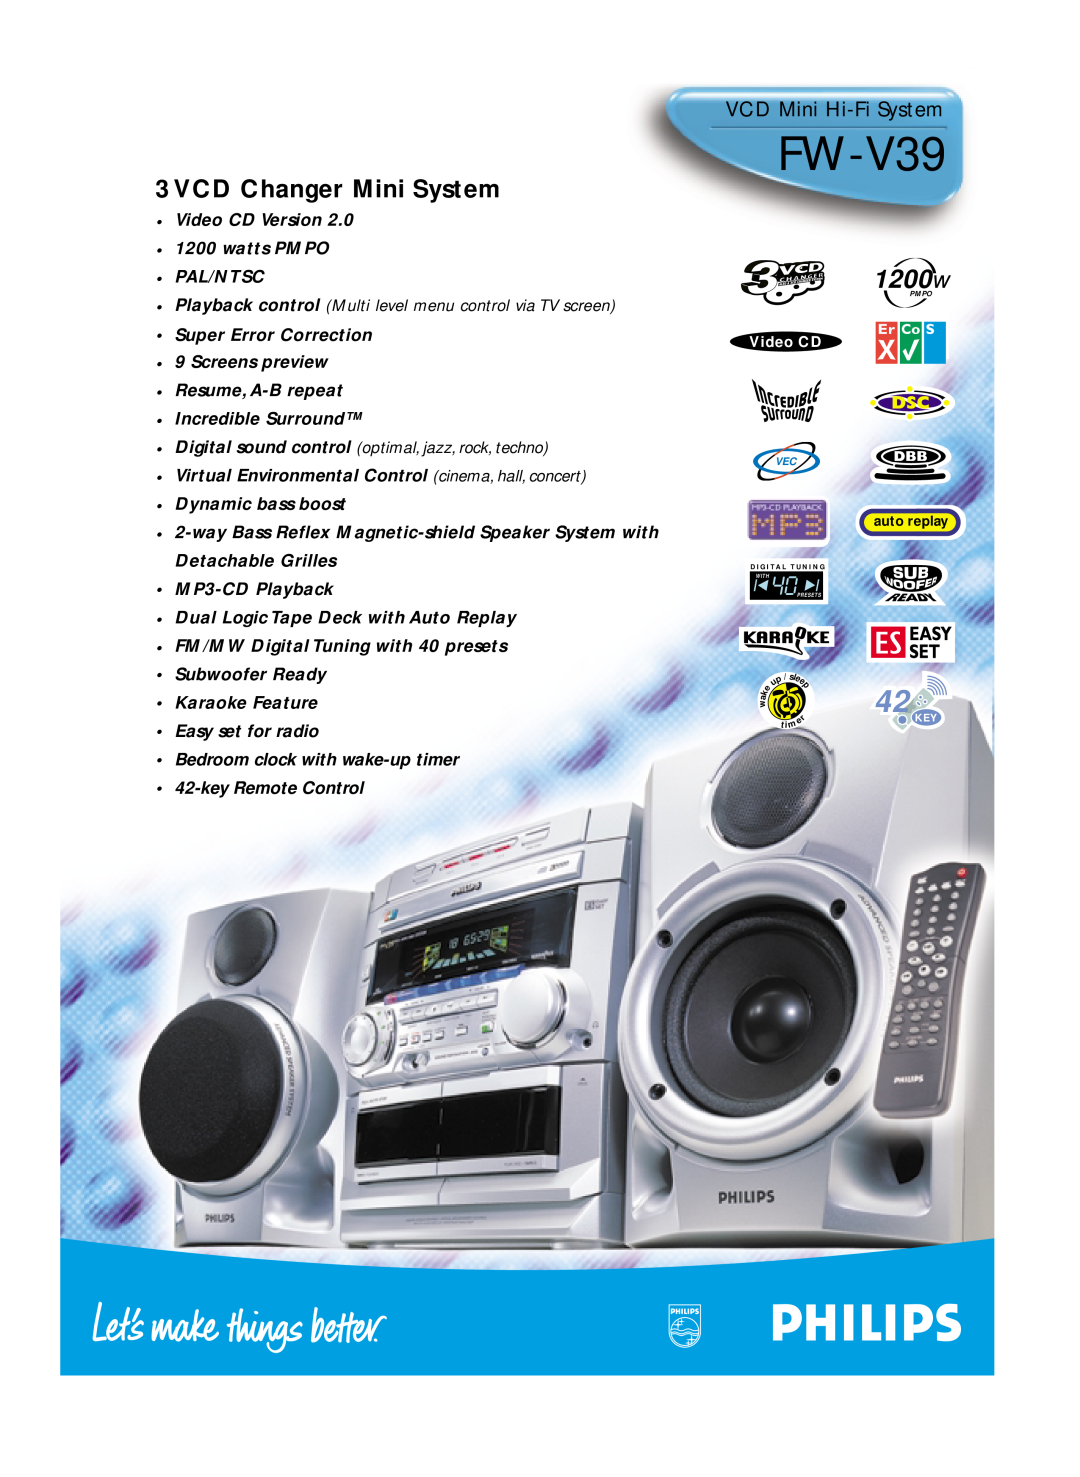 Philips FW-V39 manual VCD Mini Hi-FiSystem, 1200w, VCD Changer Mini System 